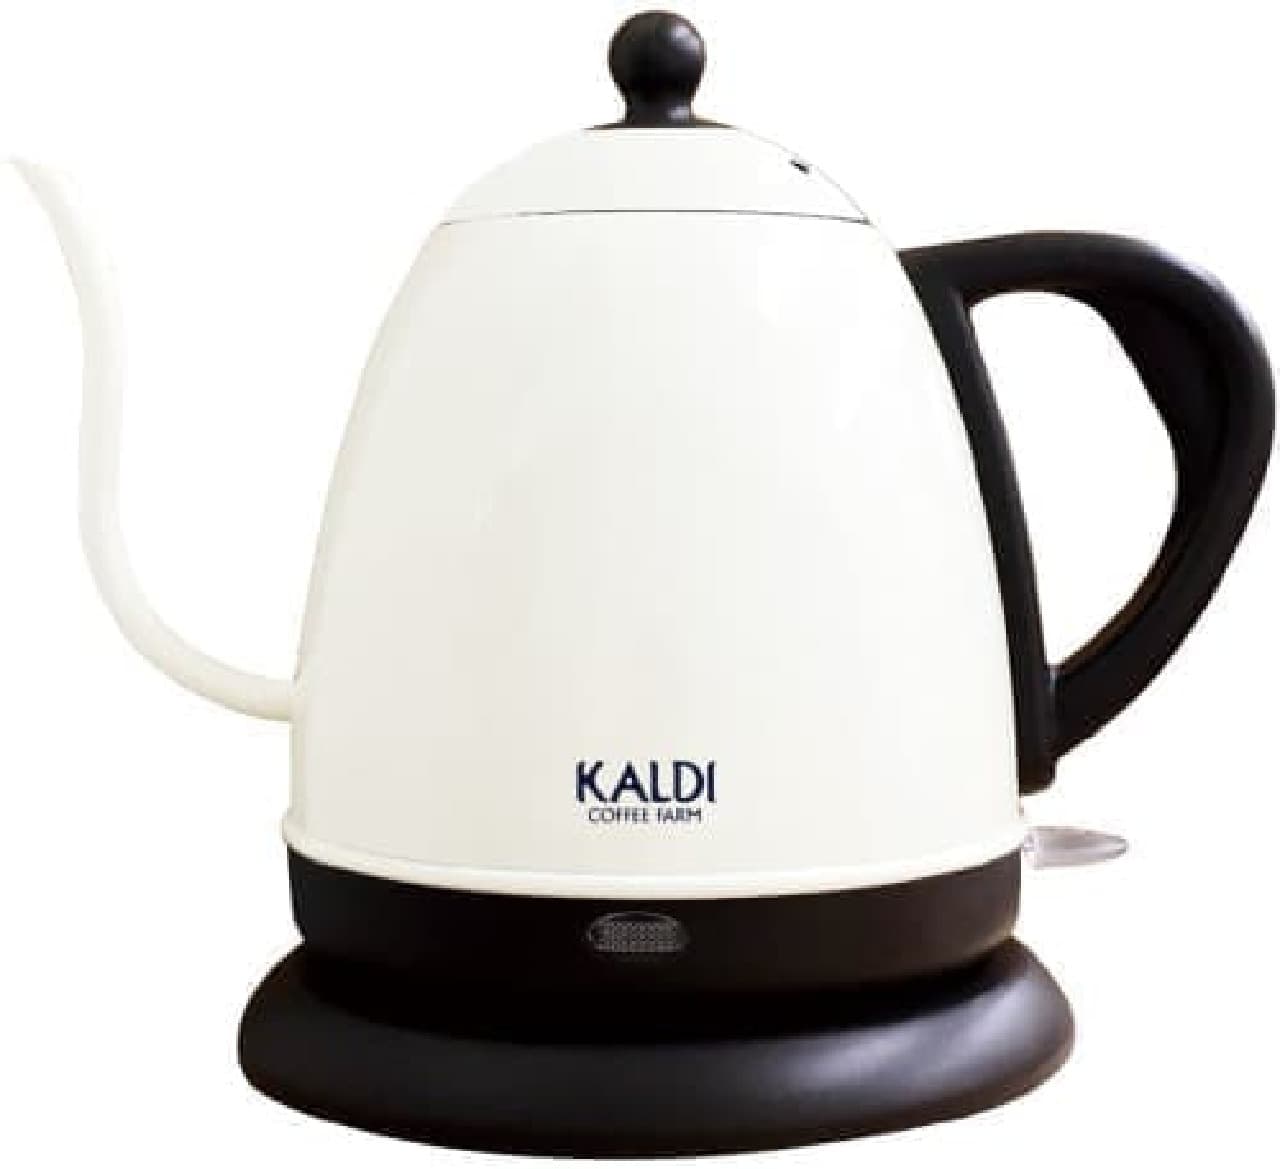 KALDI Coffee Farm "Original Electric Coffee Pot"